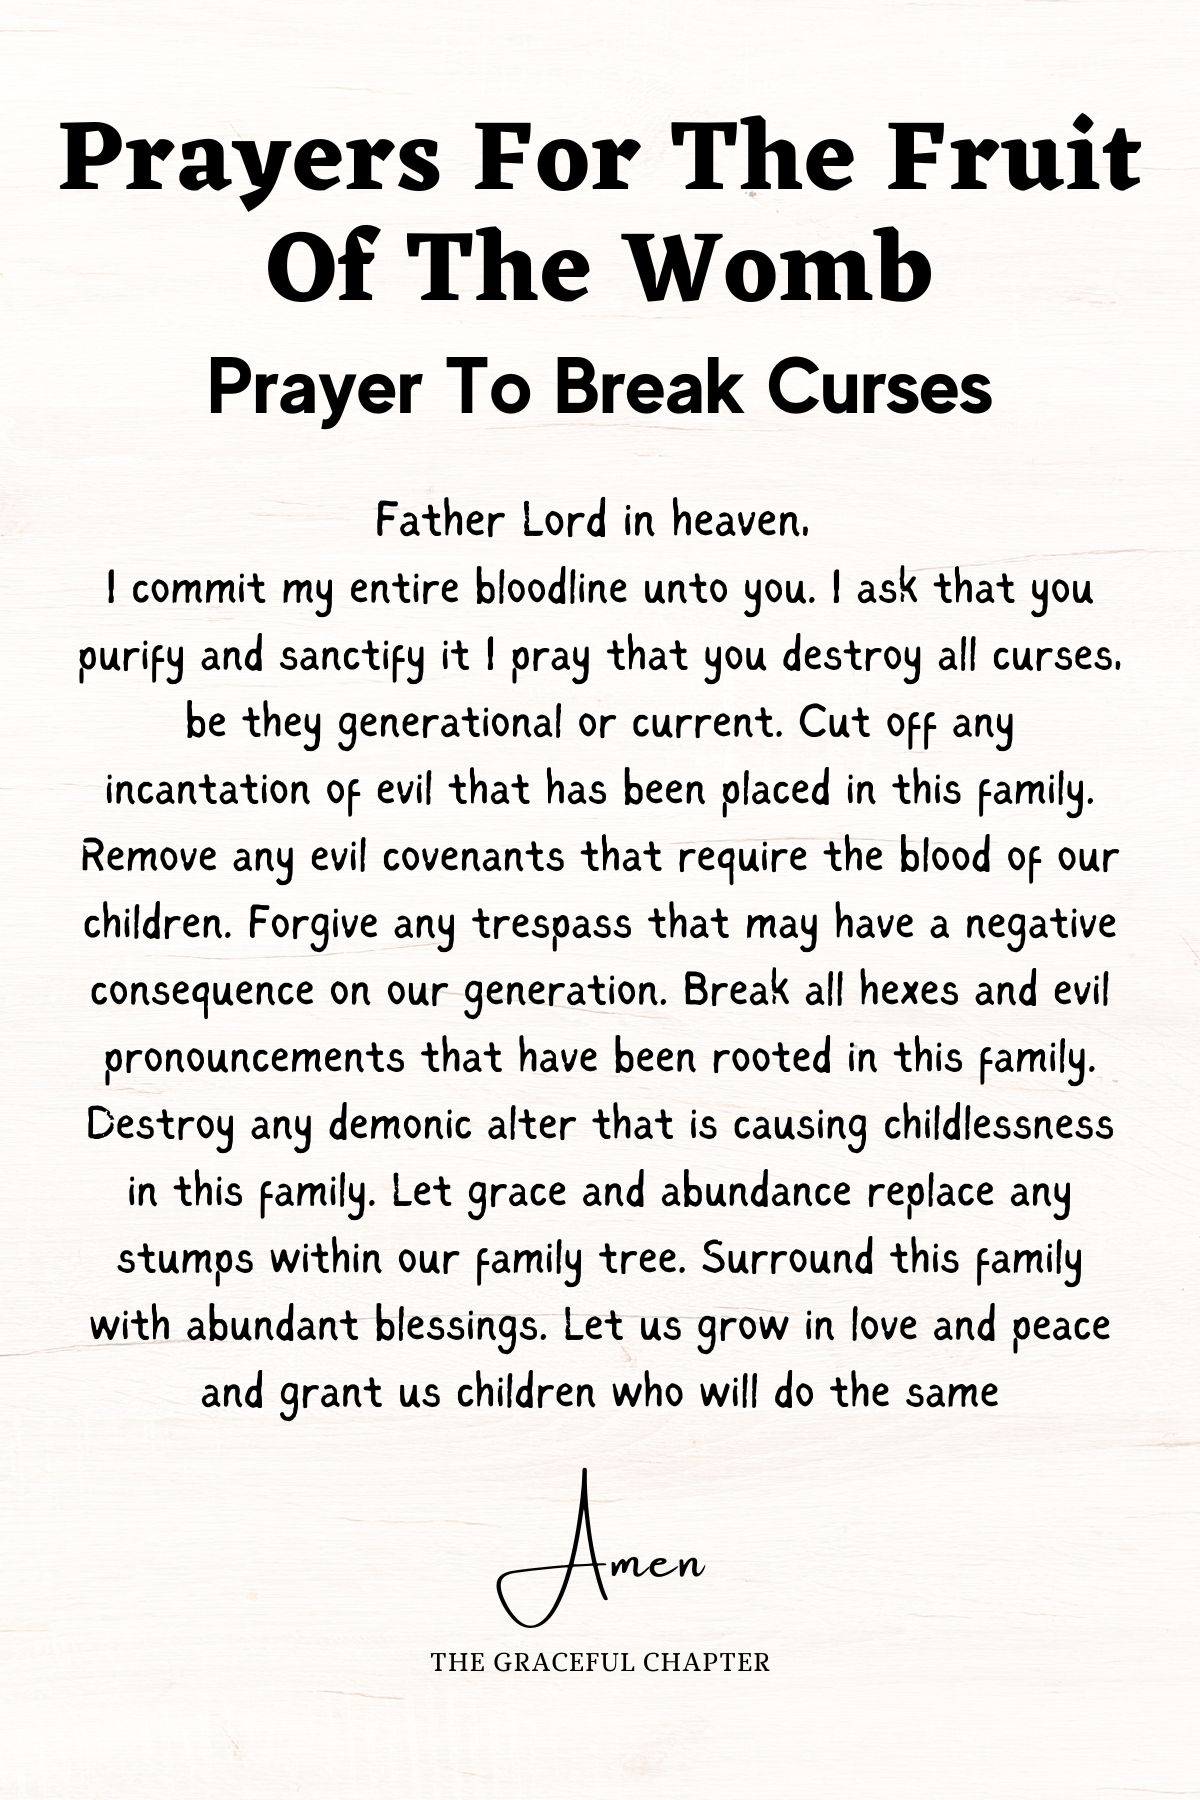 Prayer to break curses